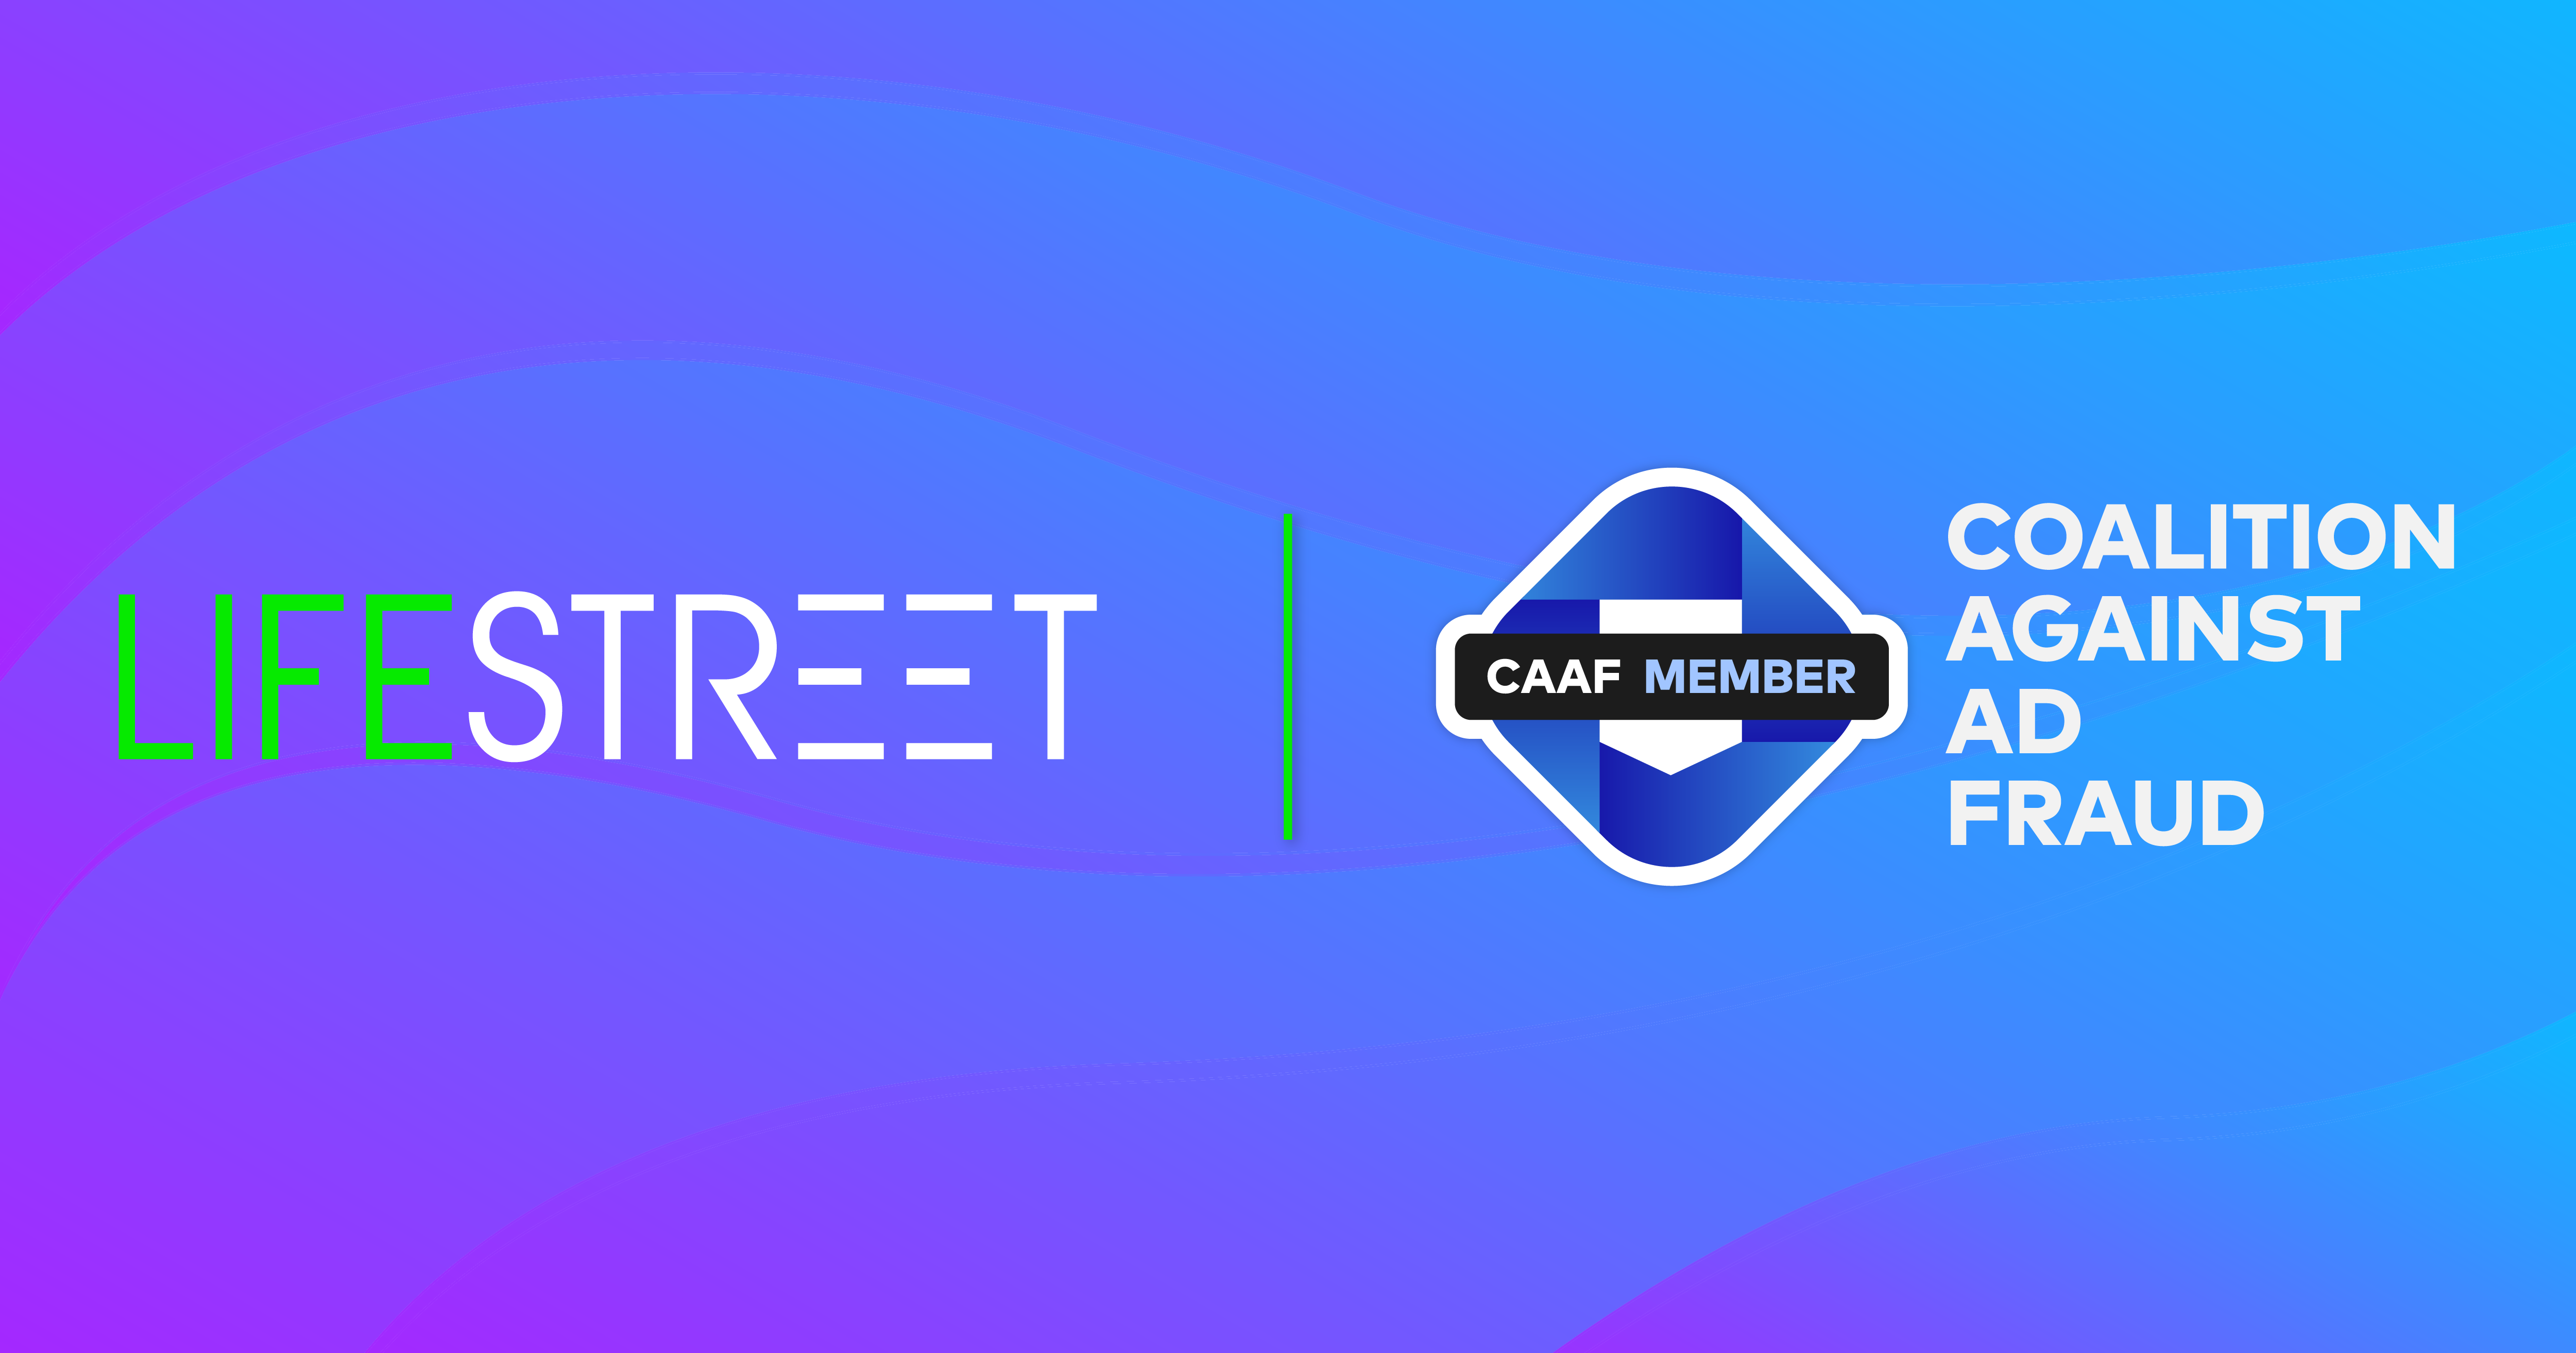 LifeStreet becomes CAAF member